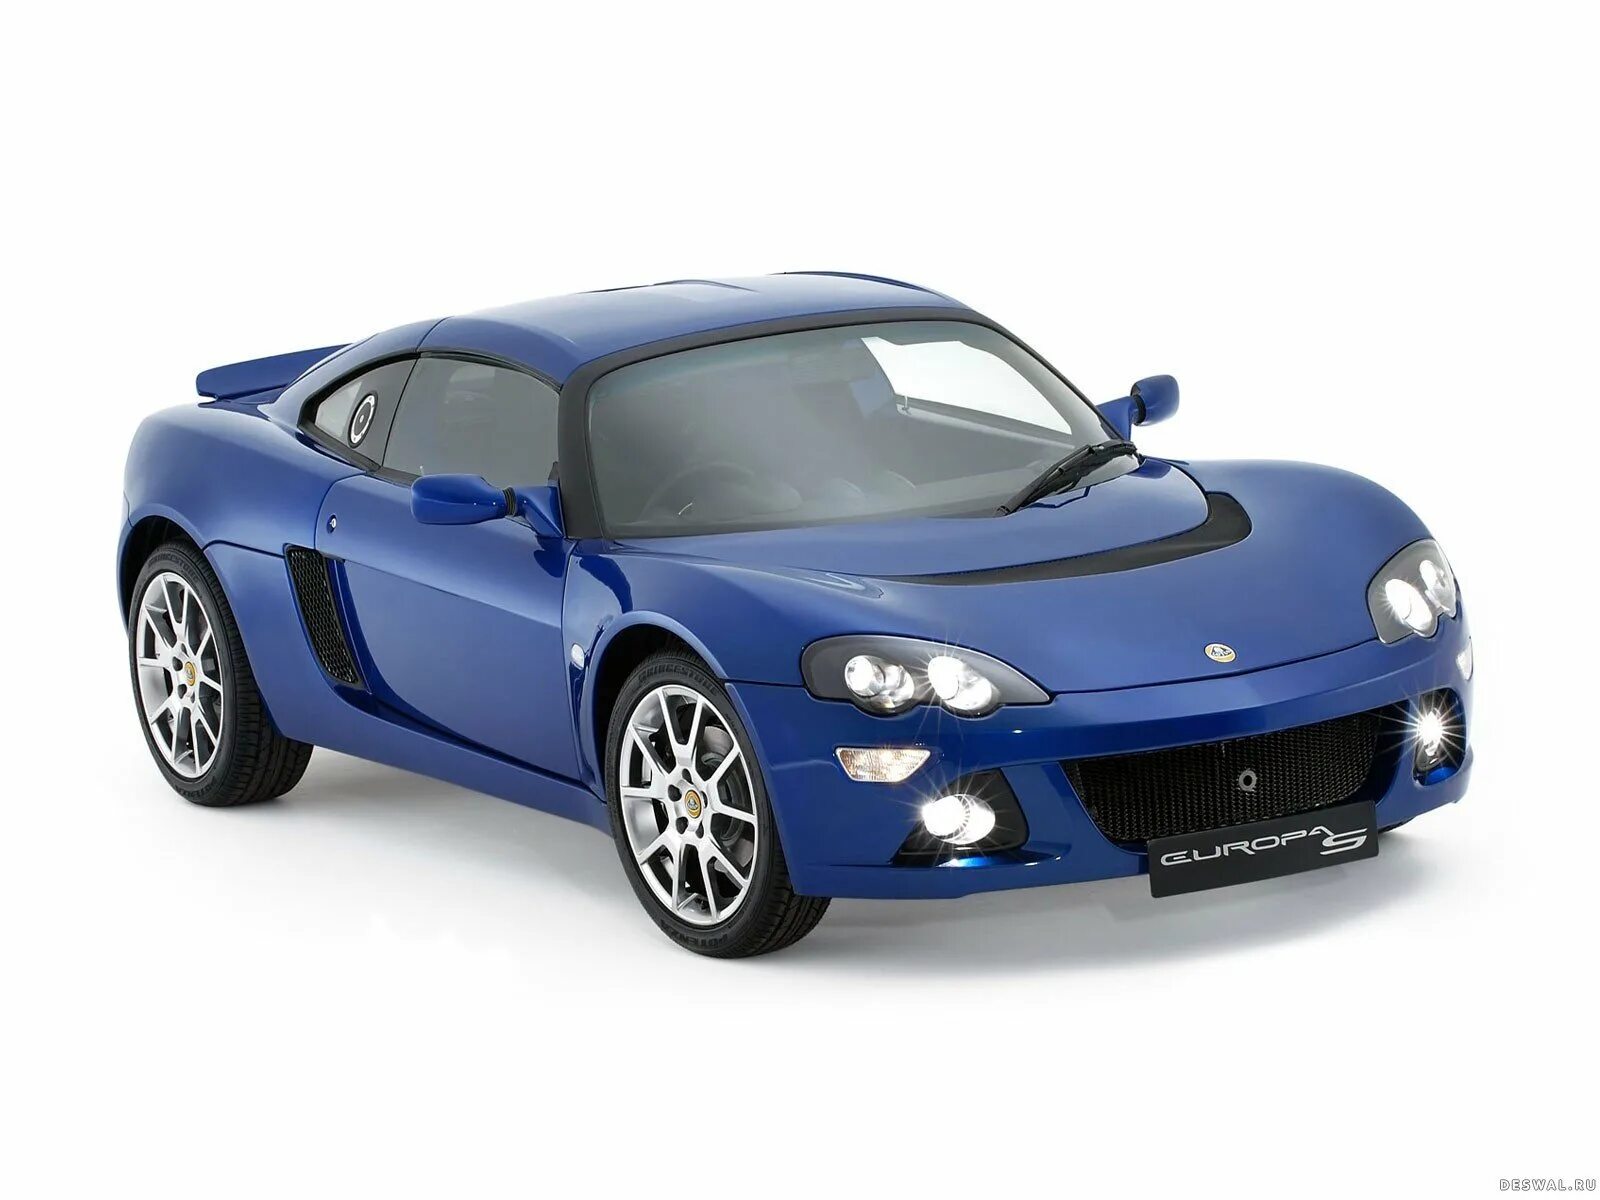 Lotus Europa 2006. Синий Лотус машина. Автомобиль на белом фоне. Машинка на белом фоне. Машинки на белом фоне